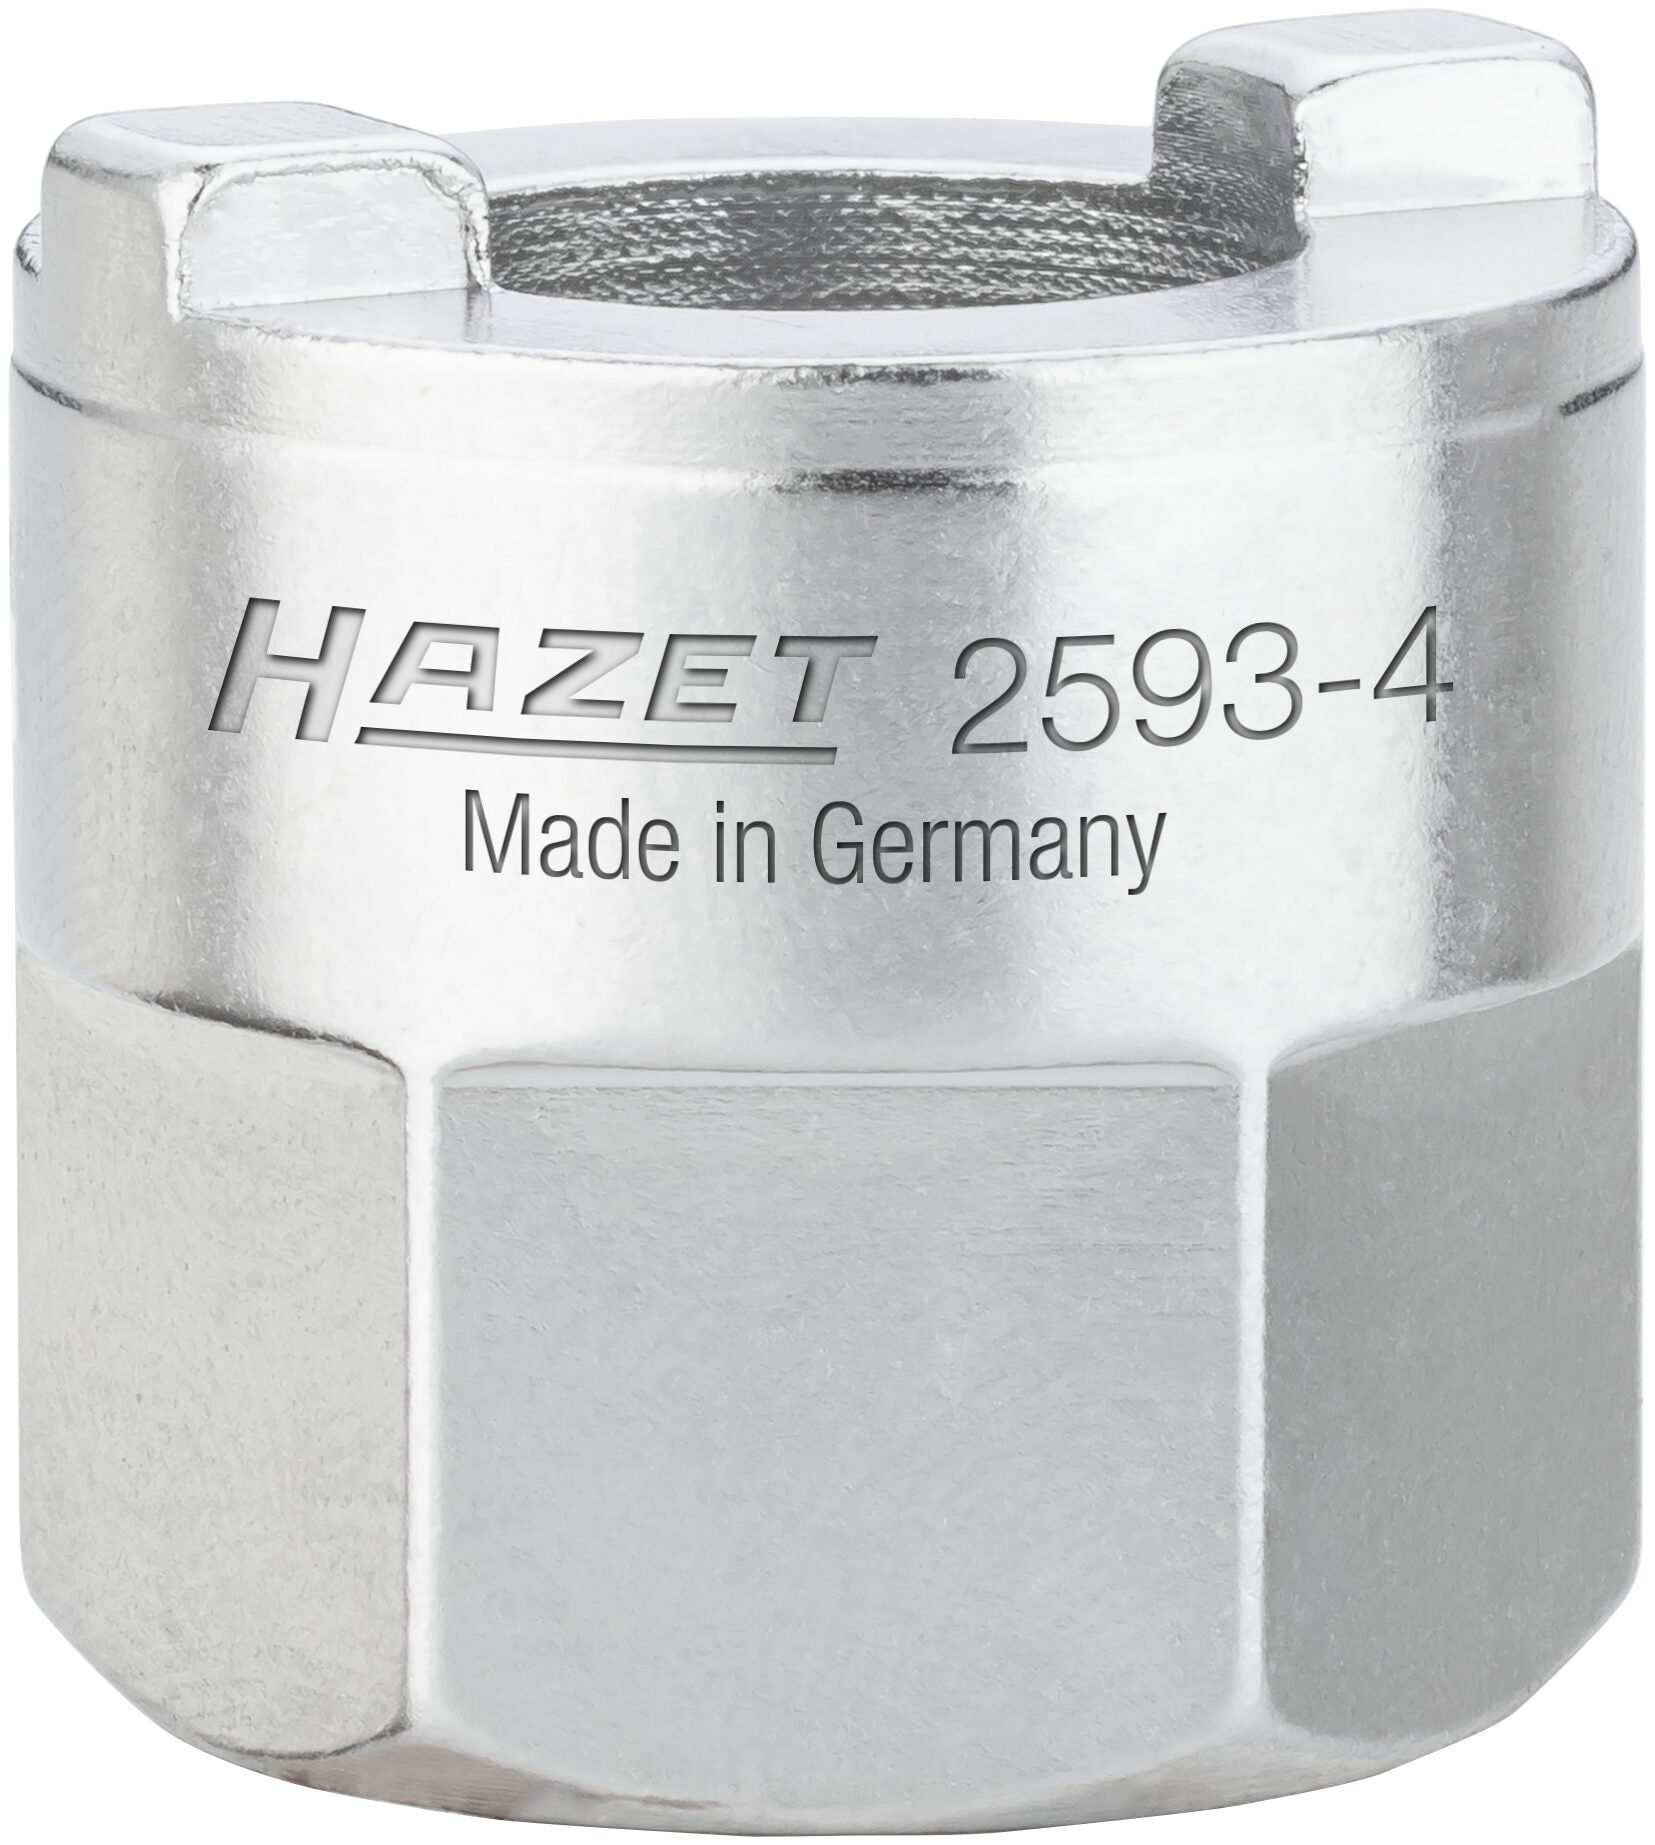 Hazet Shock Absorber Crown Wrench 2593-4 14.5mm For Sale Online – Mektronics